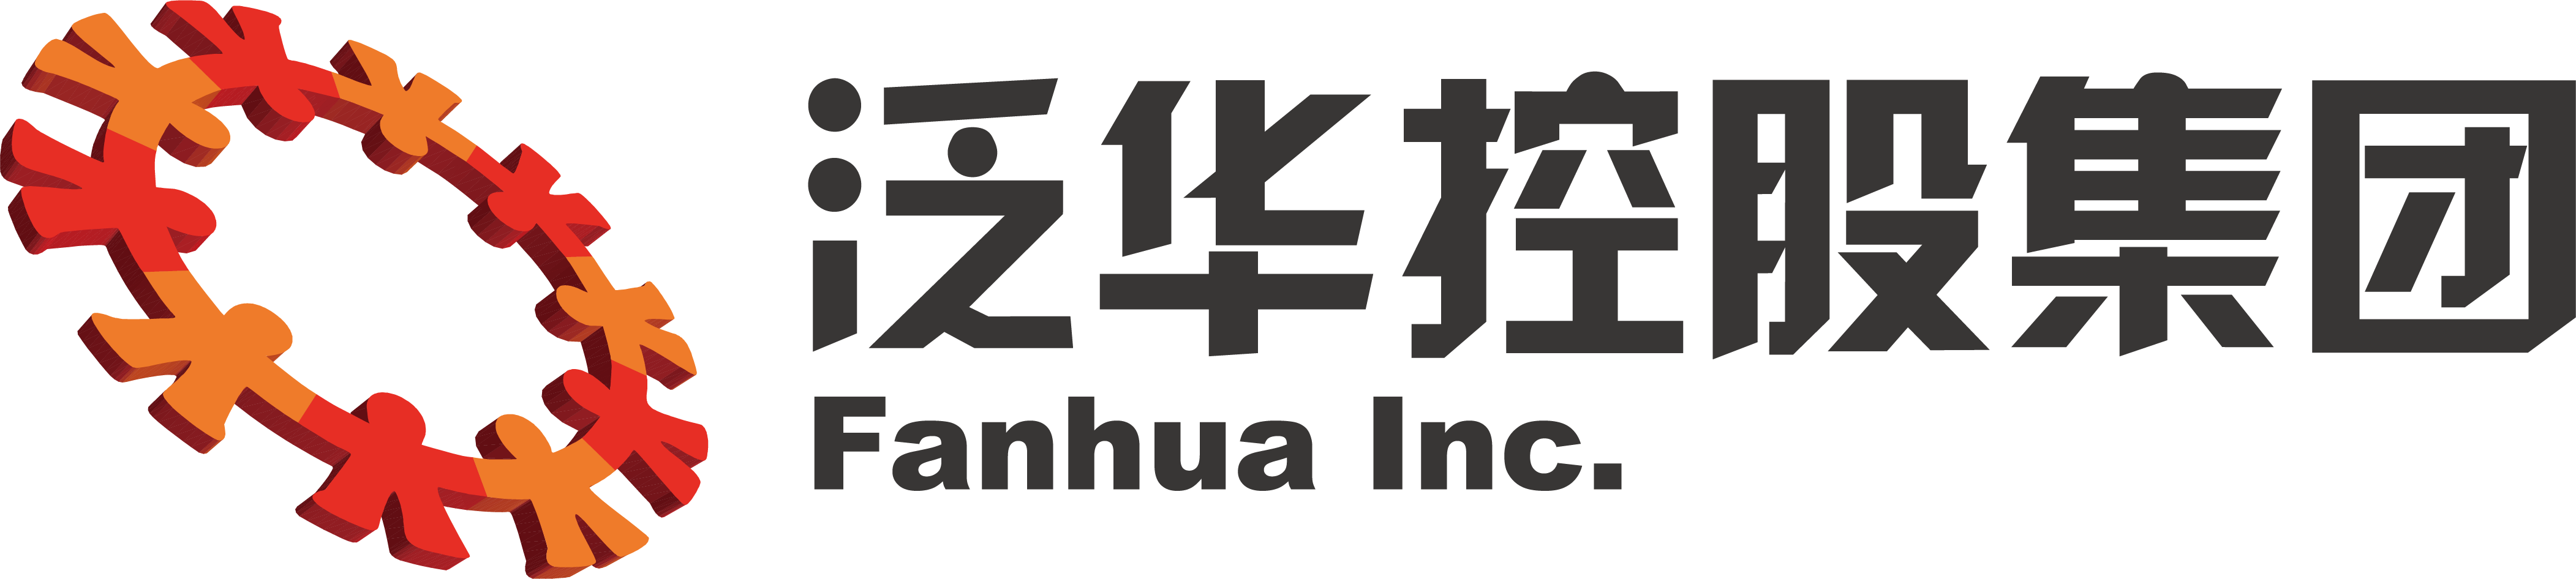 Logo Fanhua Inc.